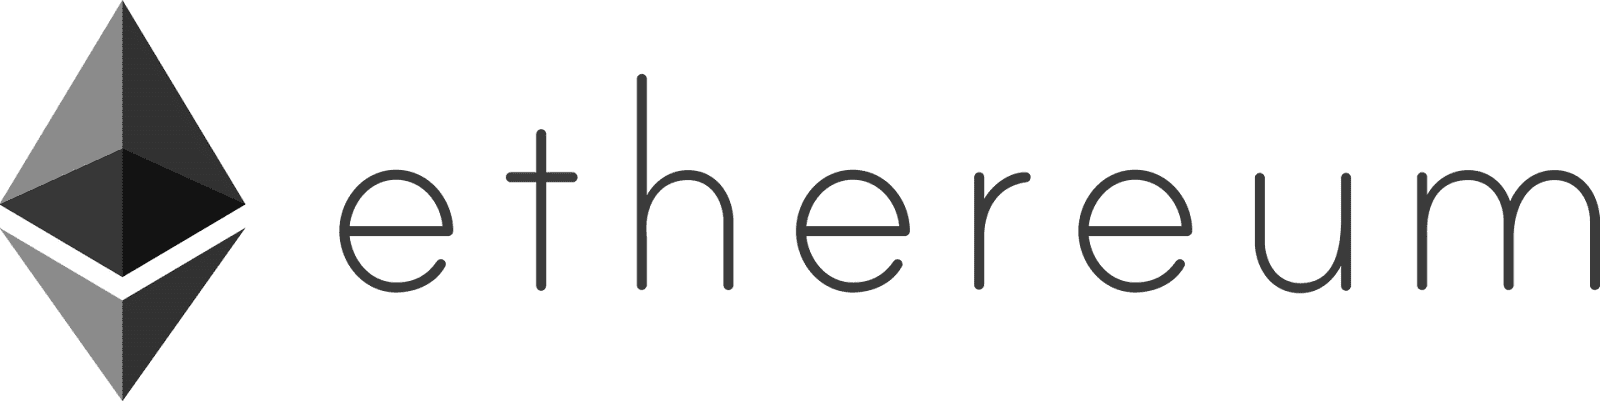 Ethereum logo.